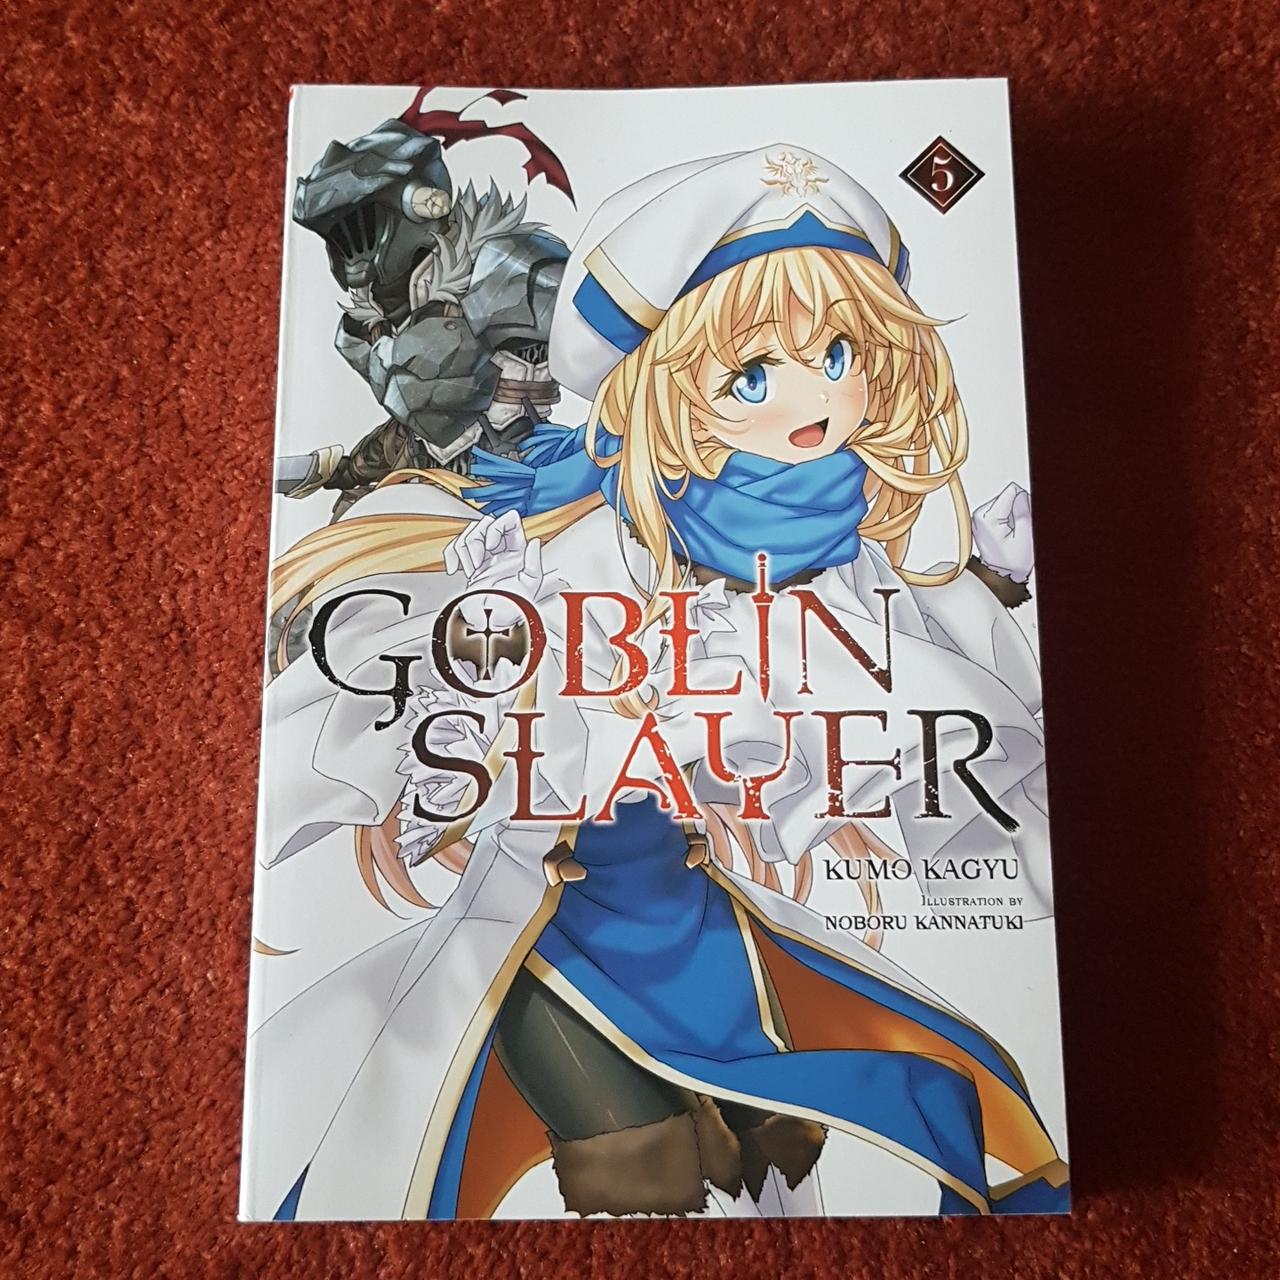 Goblin Slayer, Vol. 5 (manga) (Goblin Slayer (manga), 5)